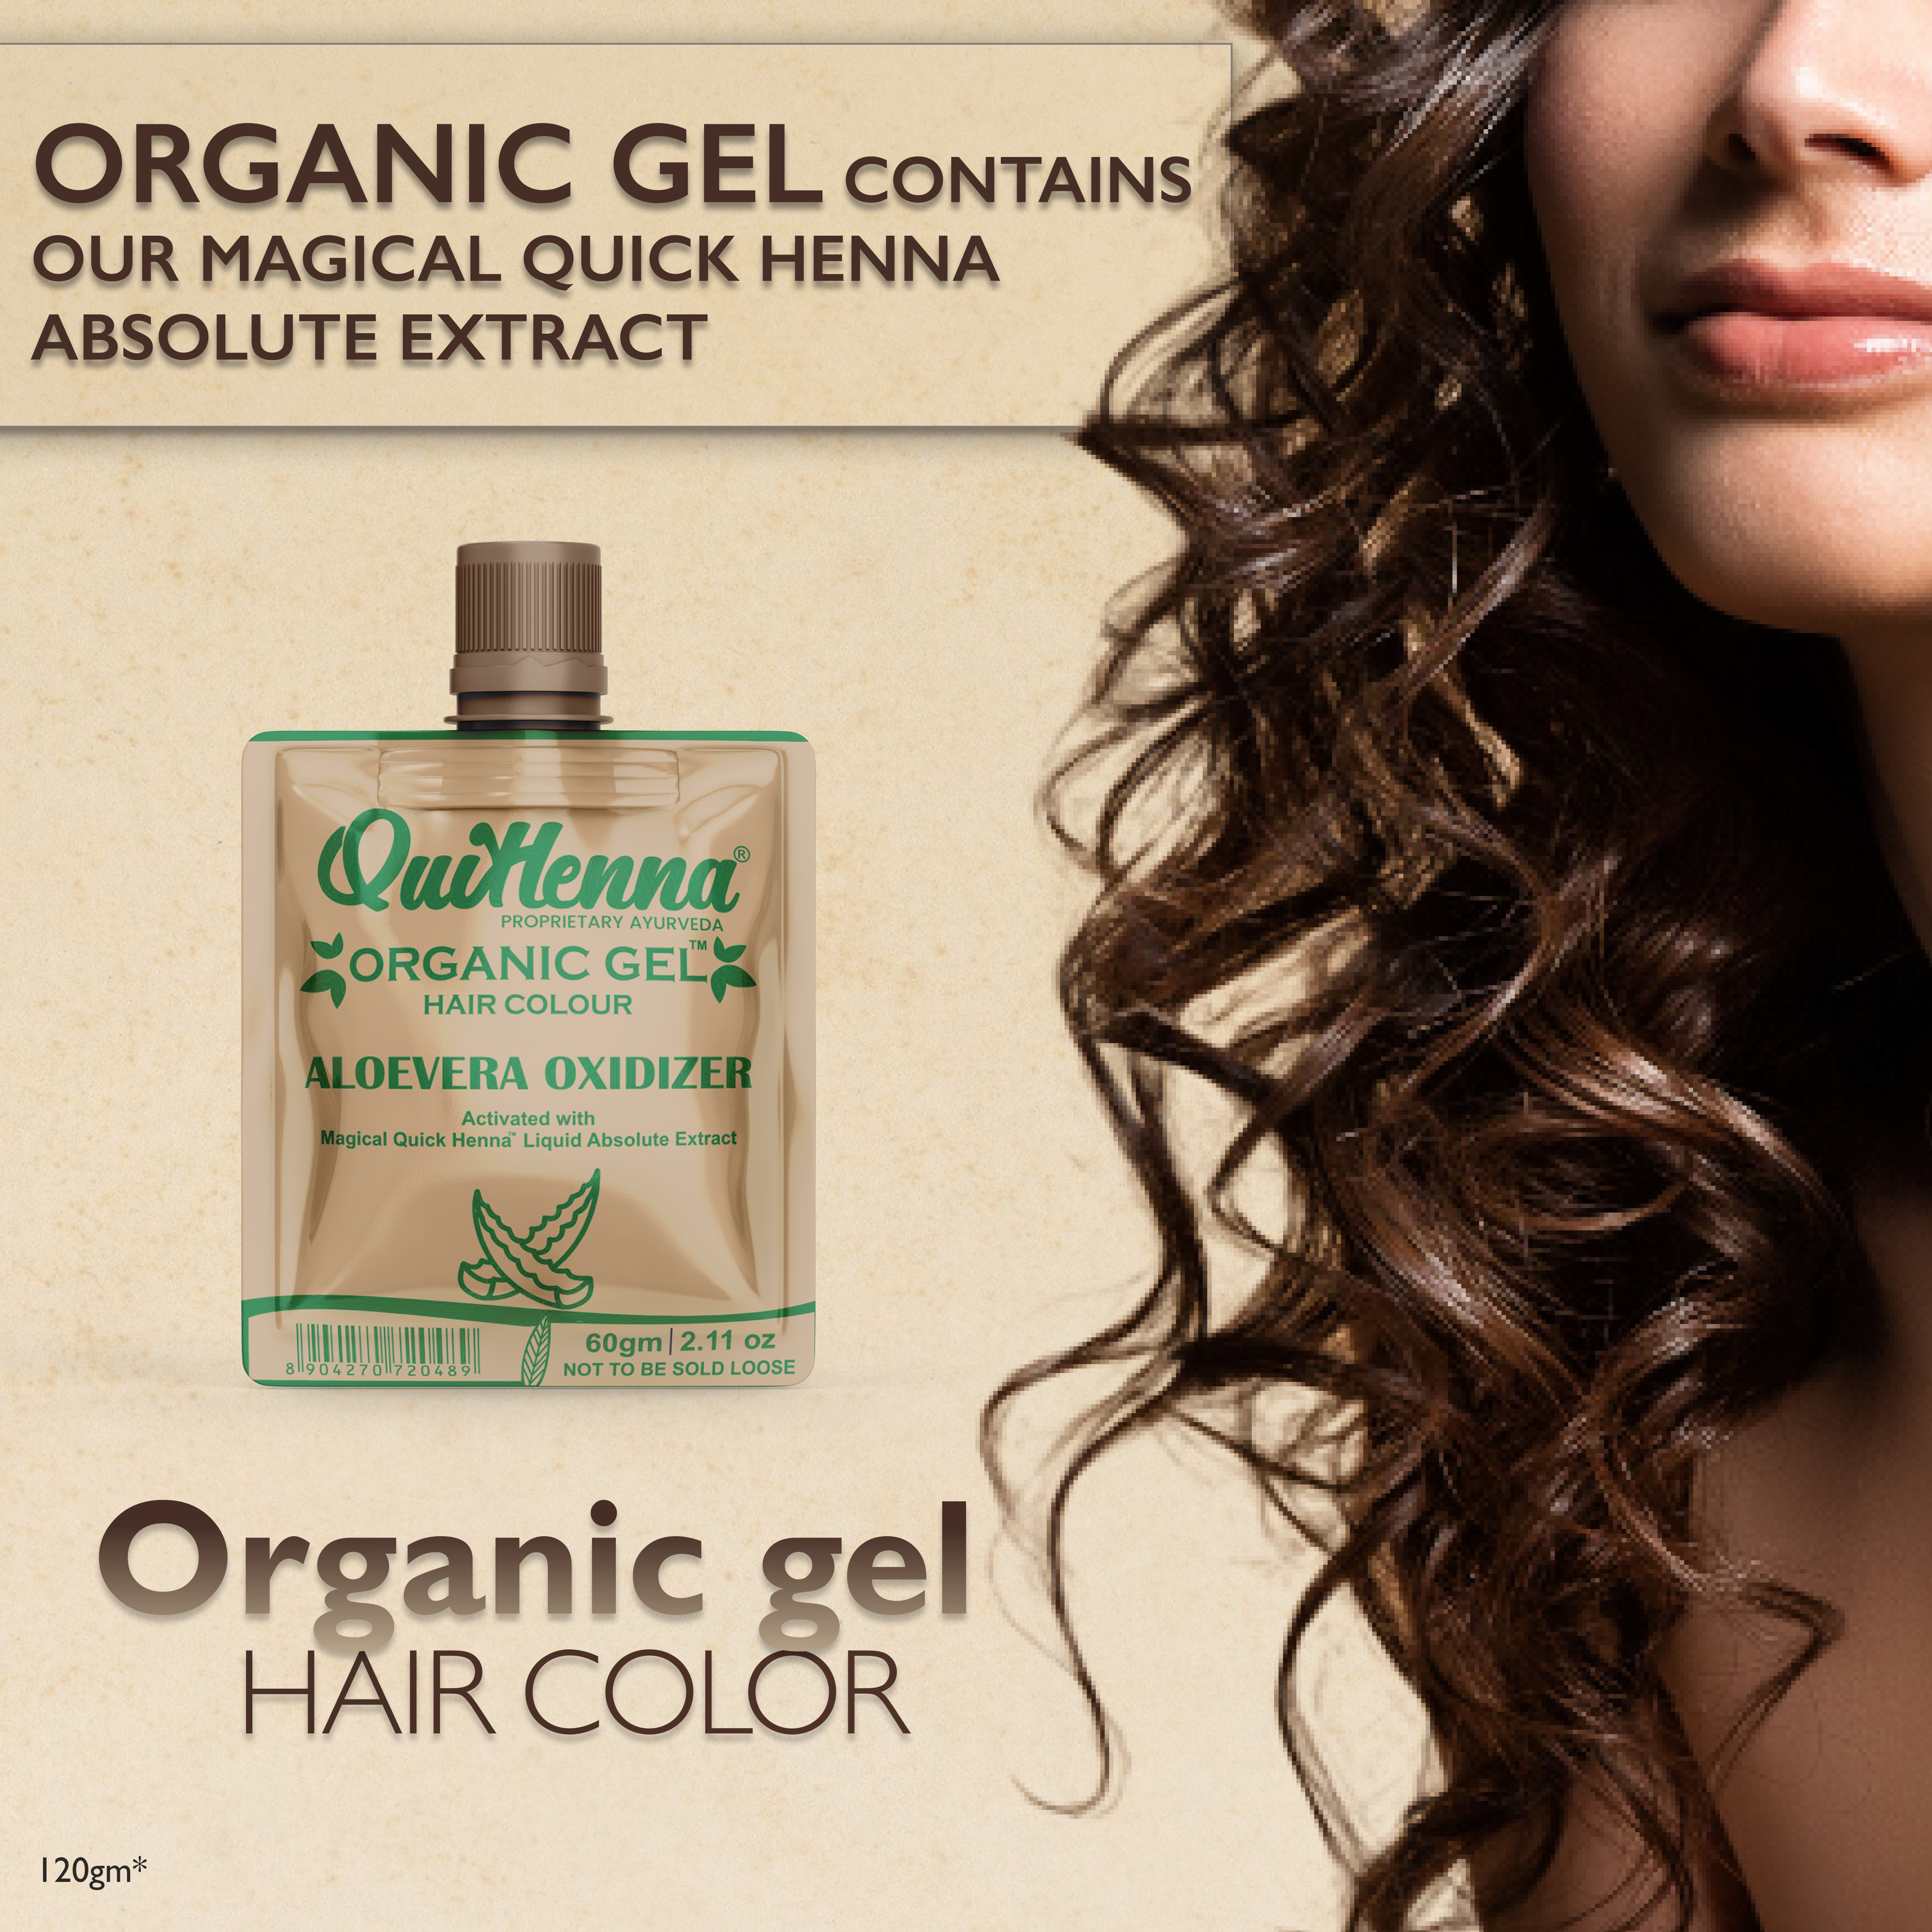 QuikHenna 3G Coffee Brown Damage Free Organic Gel Hair Color 120g